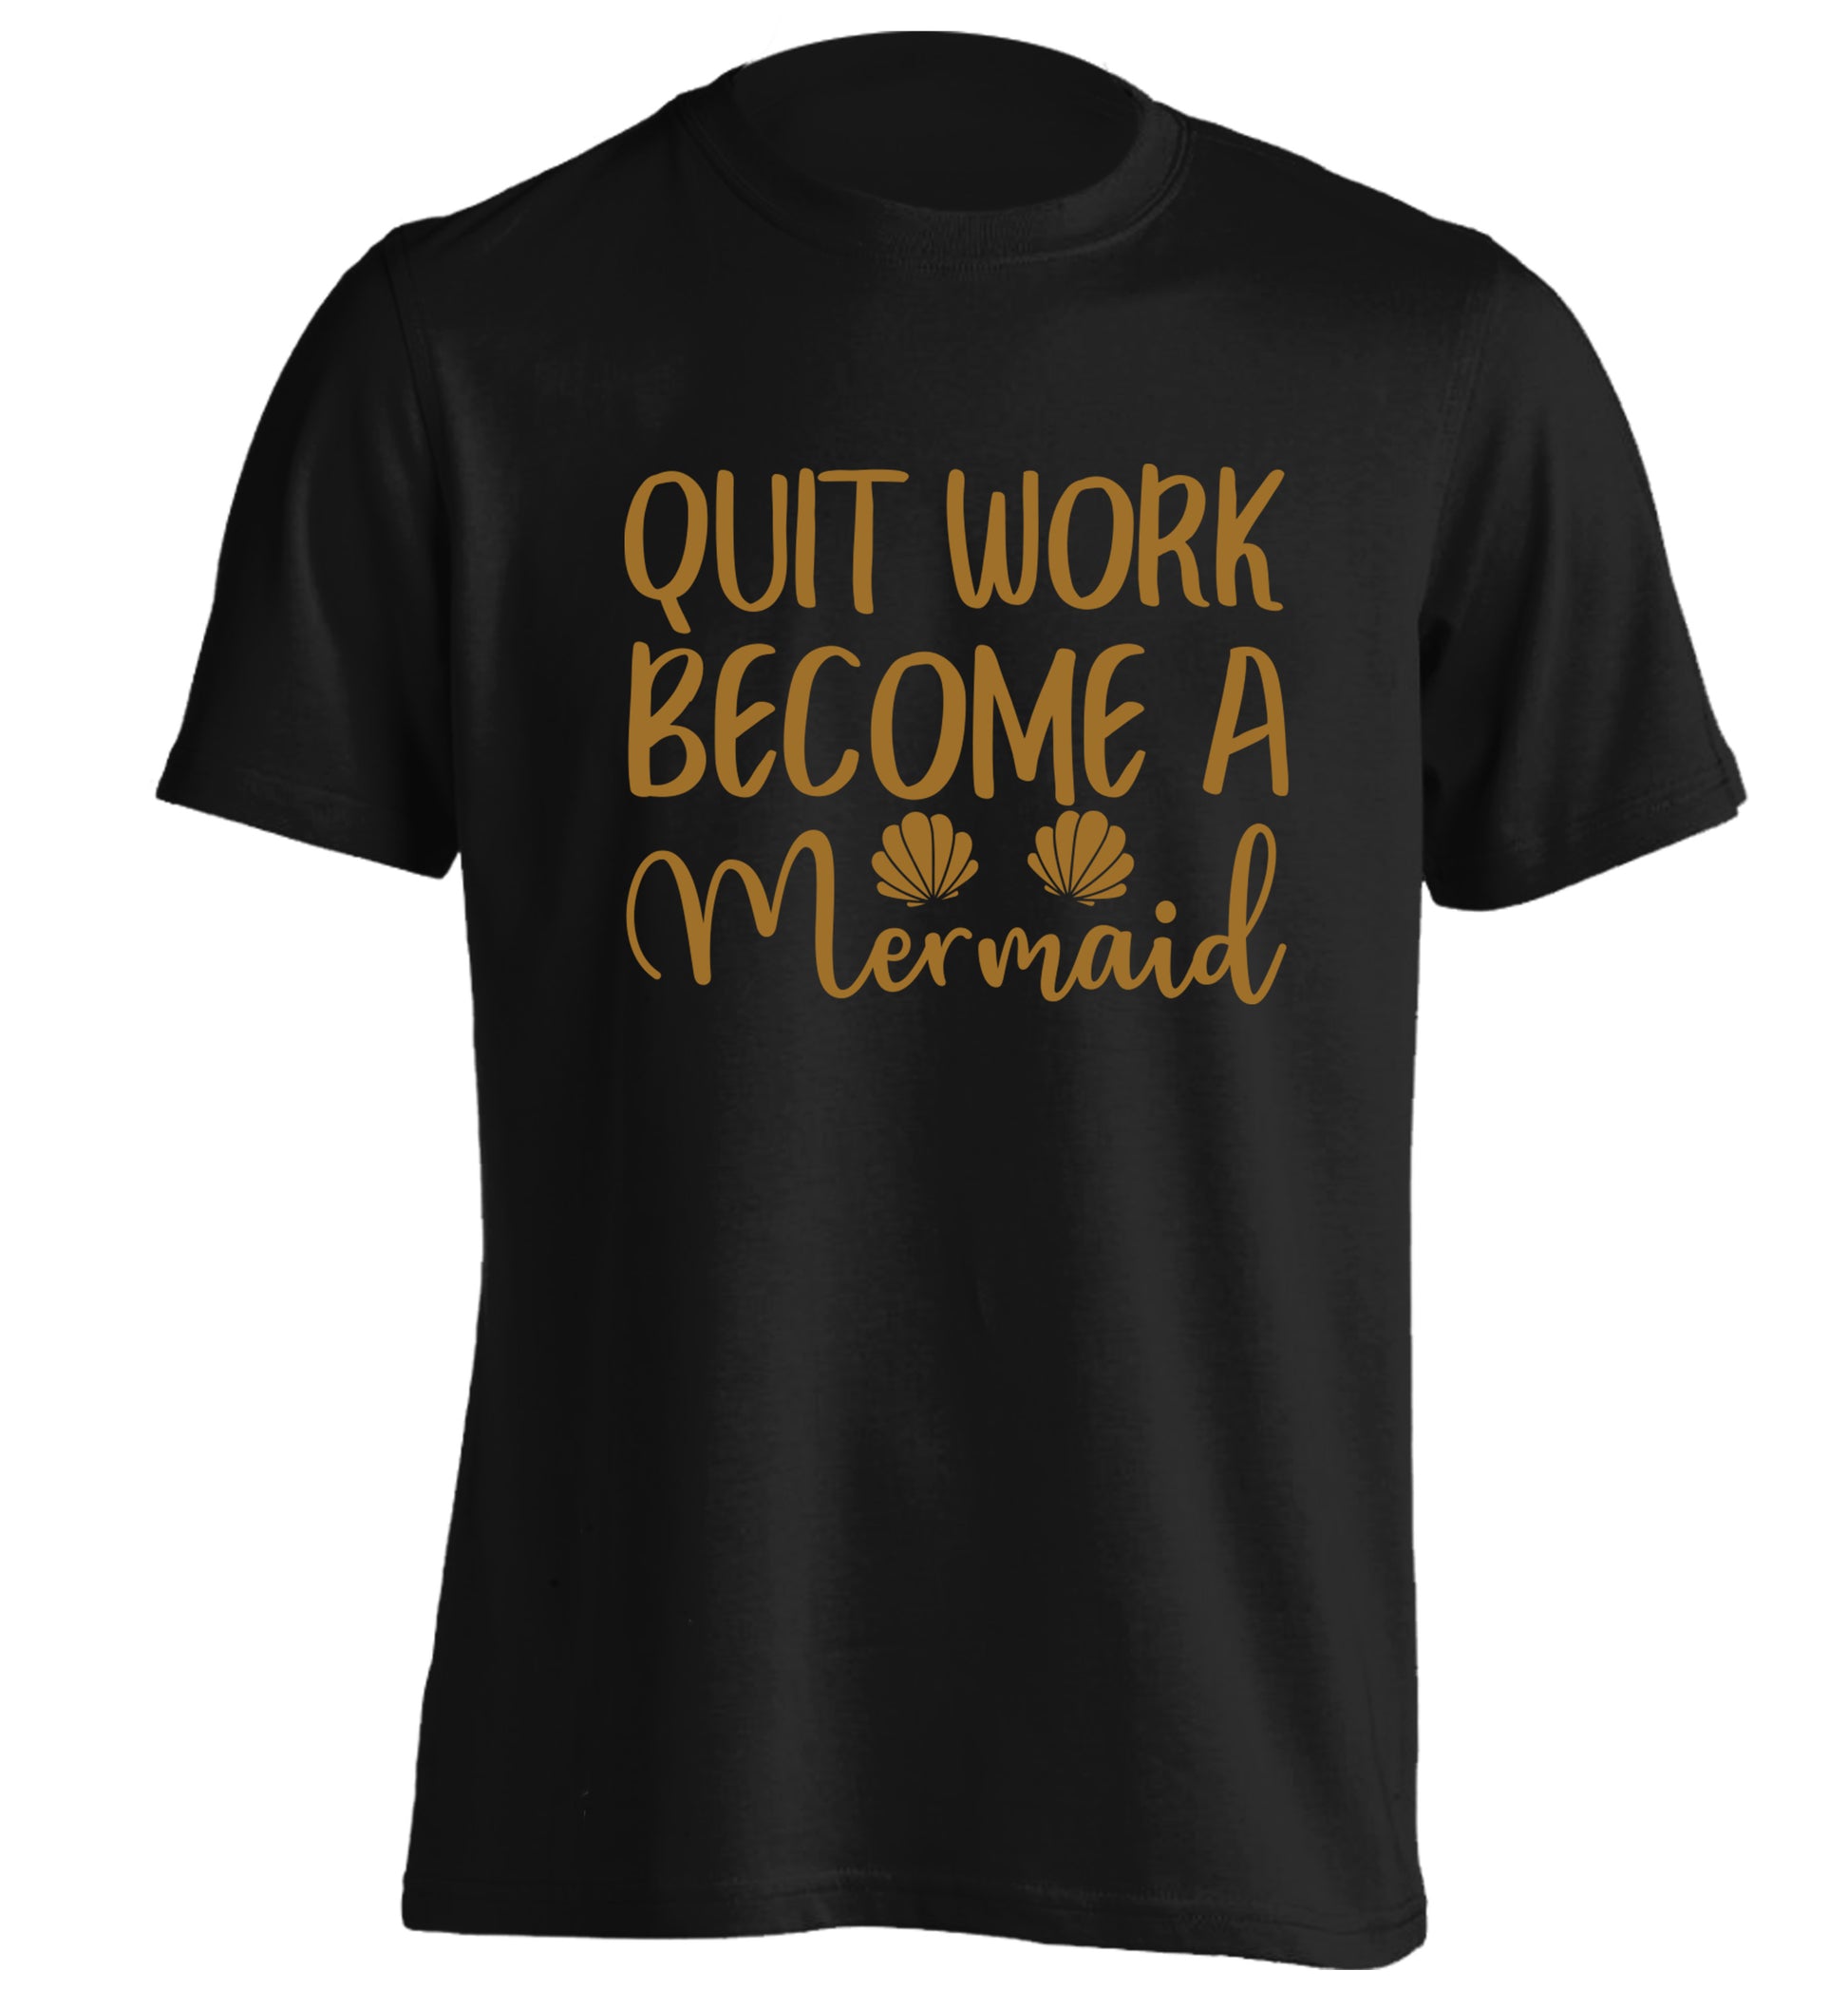 Quit work become a mermaid adults unisex black Tshirt 2XL